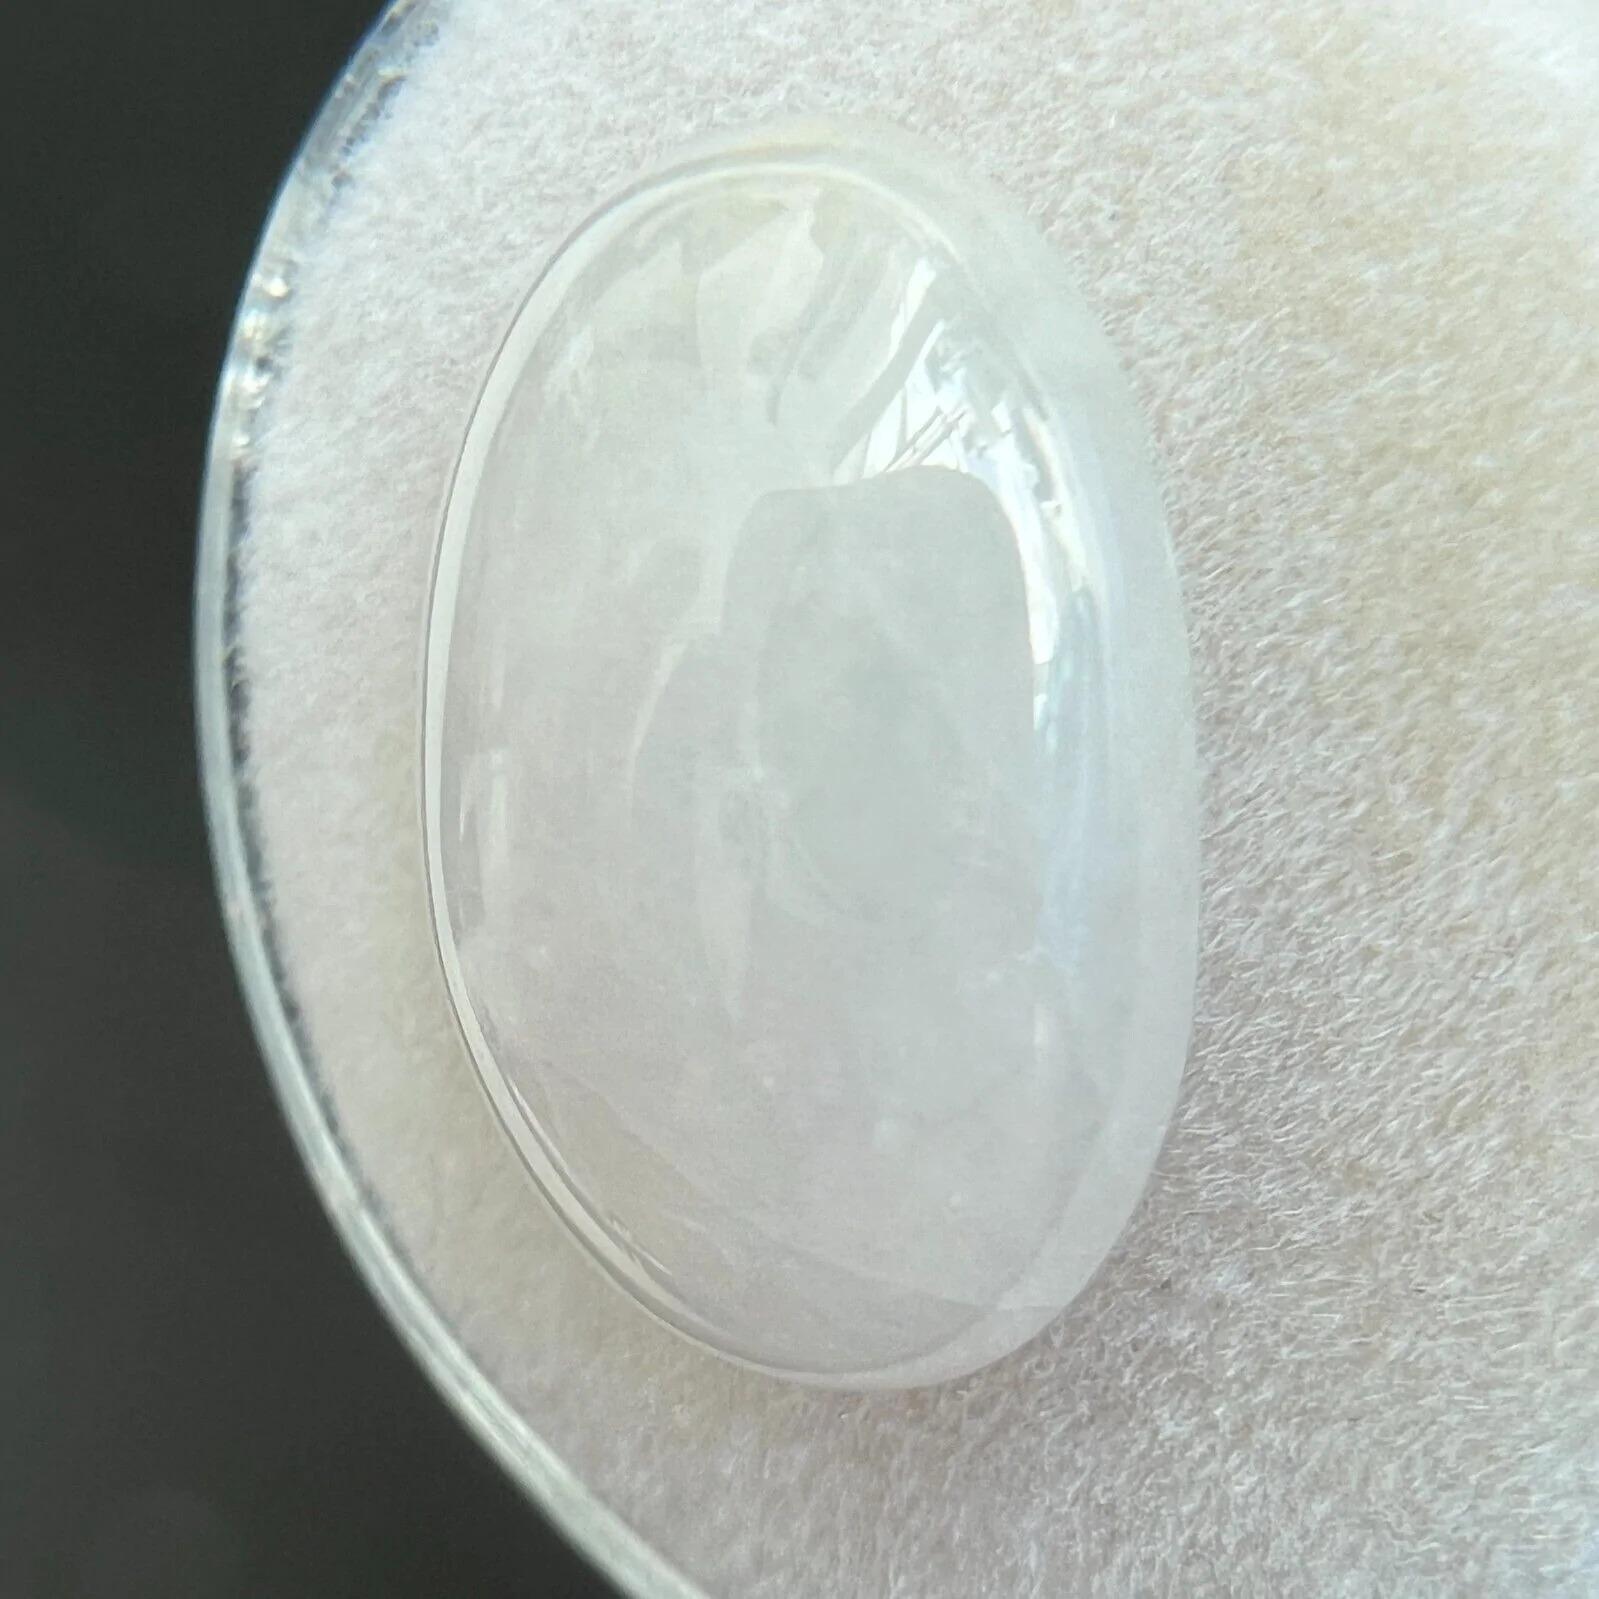 10.43ct GIA Certified White 'Ice' Jadeite Jade ‘A’ Grade Oval Cabochon Untreated

GIA Certified Untreated White Jadeite Gemstone. 
10.43 Carat with an excellent oval cabochon cut. Fully certified by GIA. Totally Untreated Jadeite jade, referred to